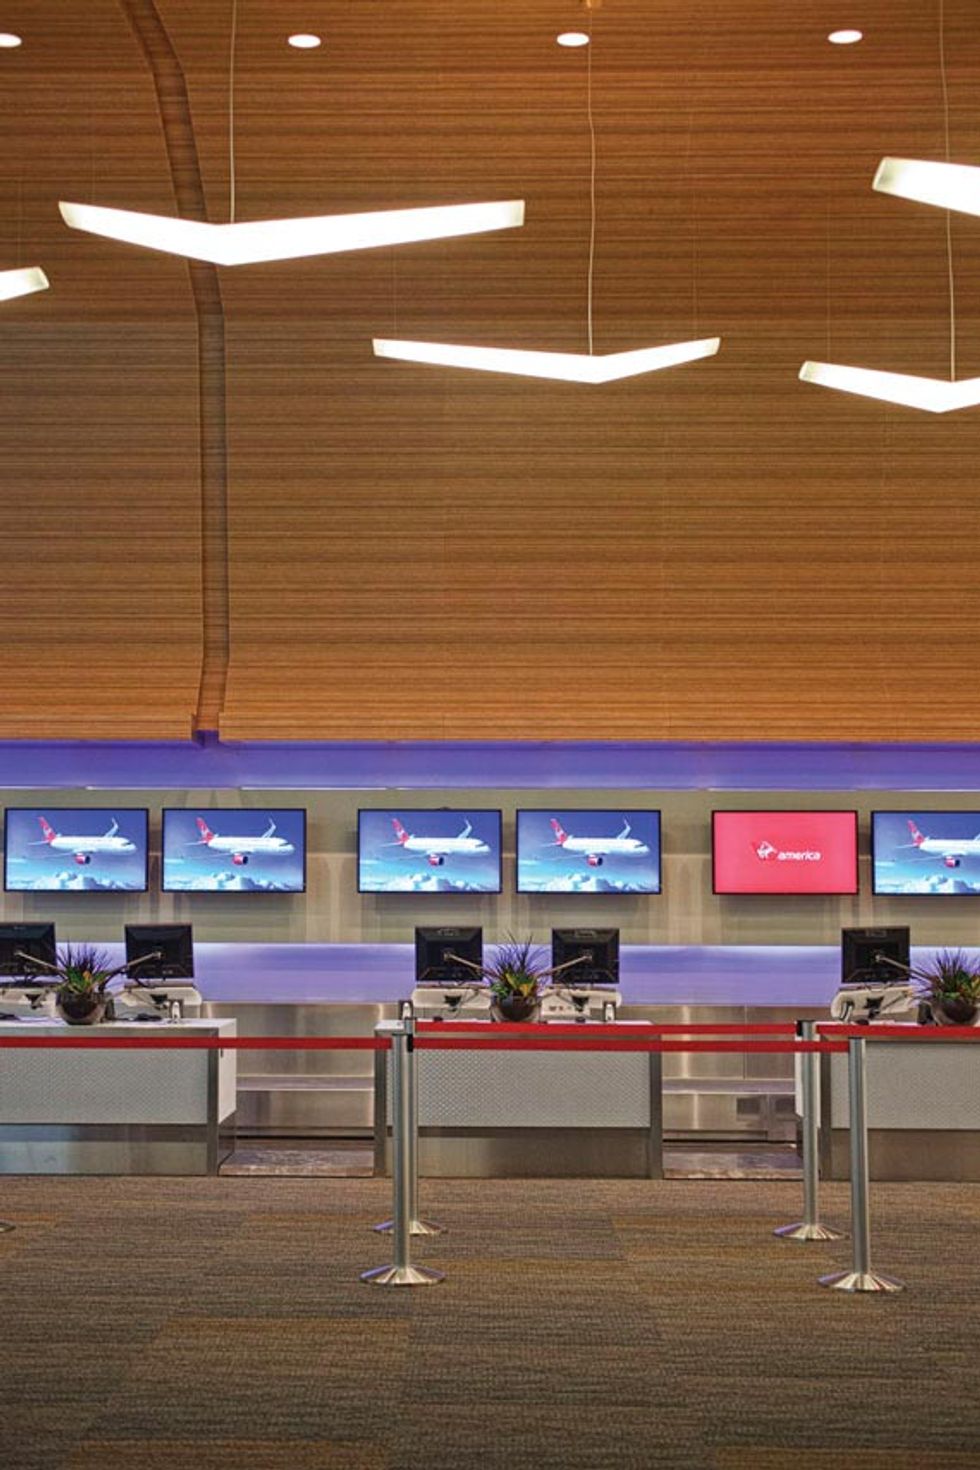 7 Very Virgin America Reasons to Love SFO's New Terminal 2